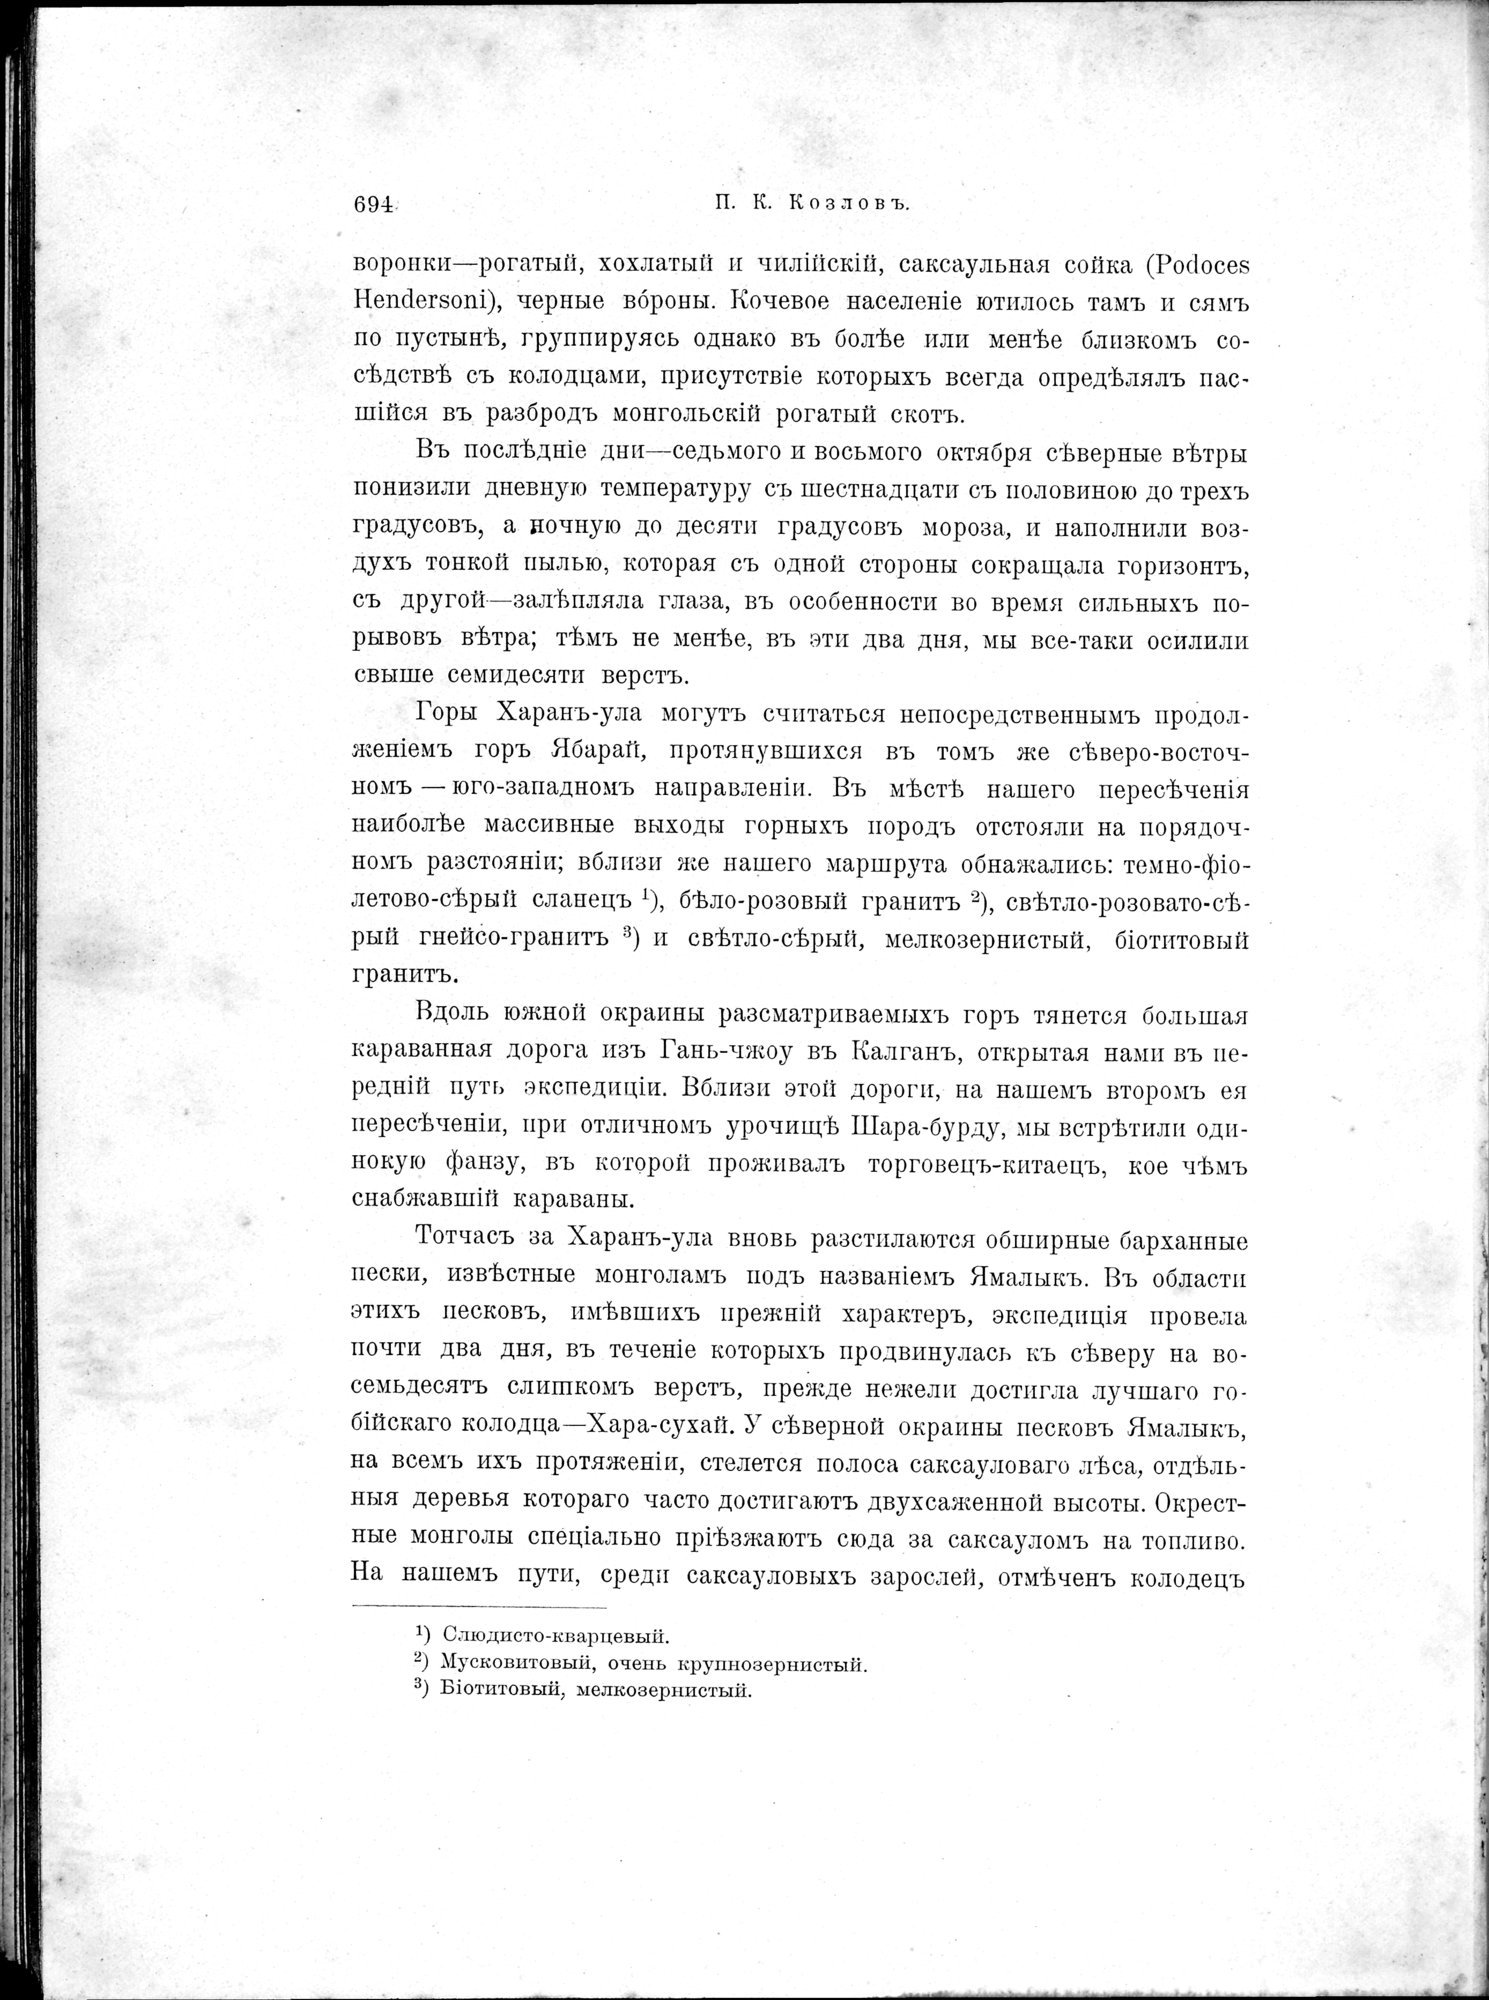 Mongoliia i Kam : vol.2 / Page 530 (Grayscale High Resolution Image)